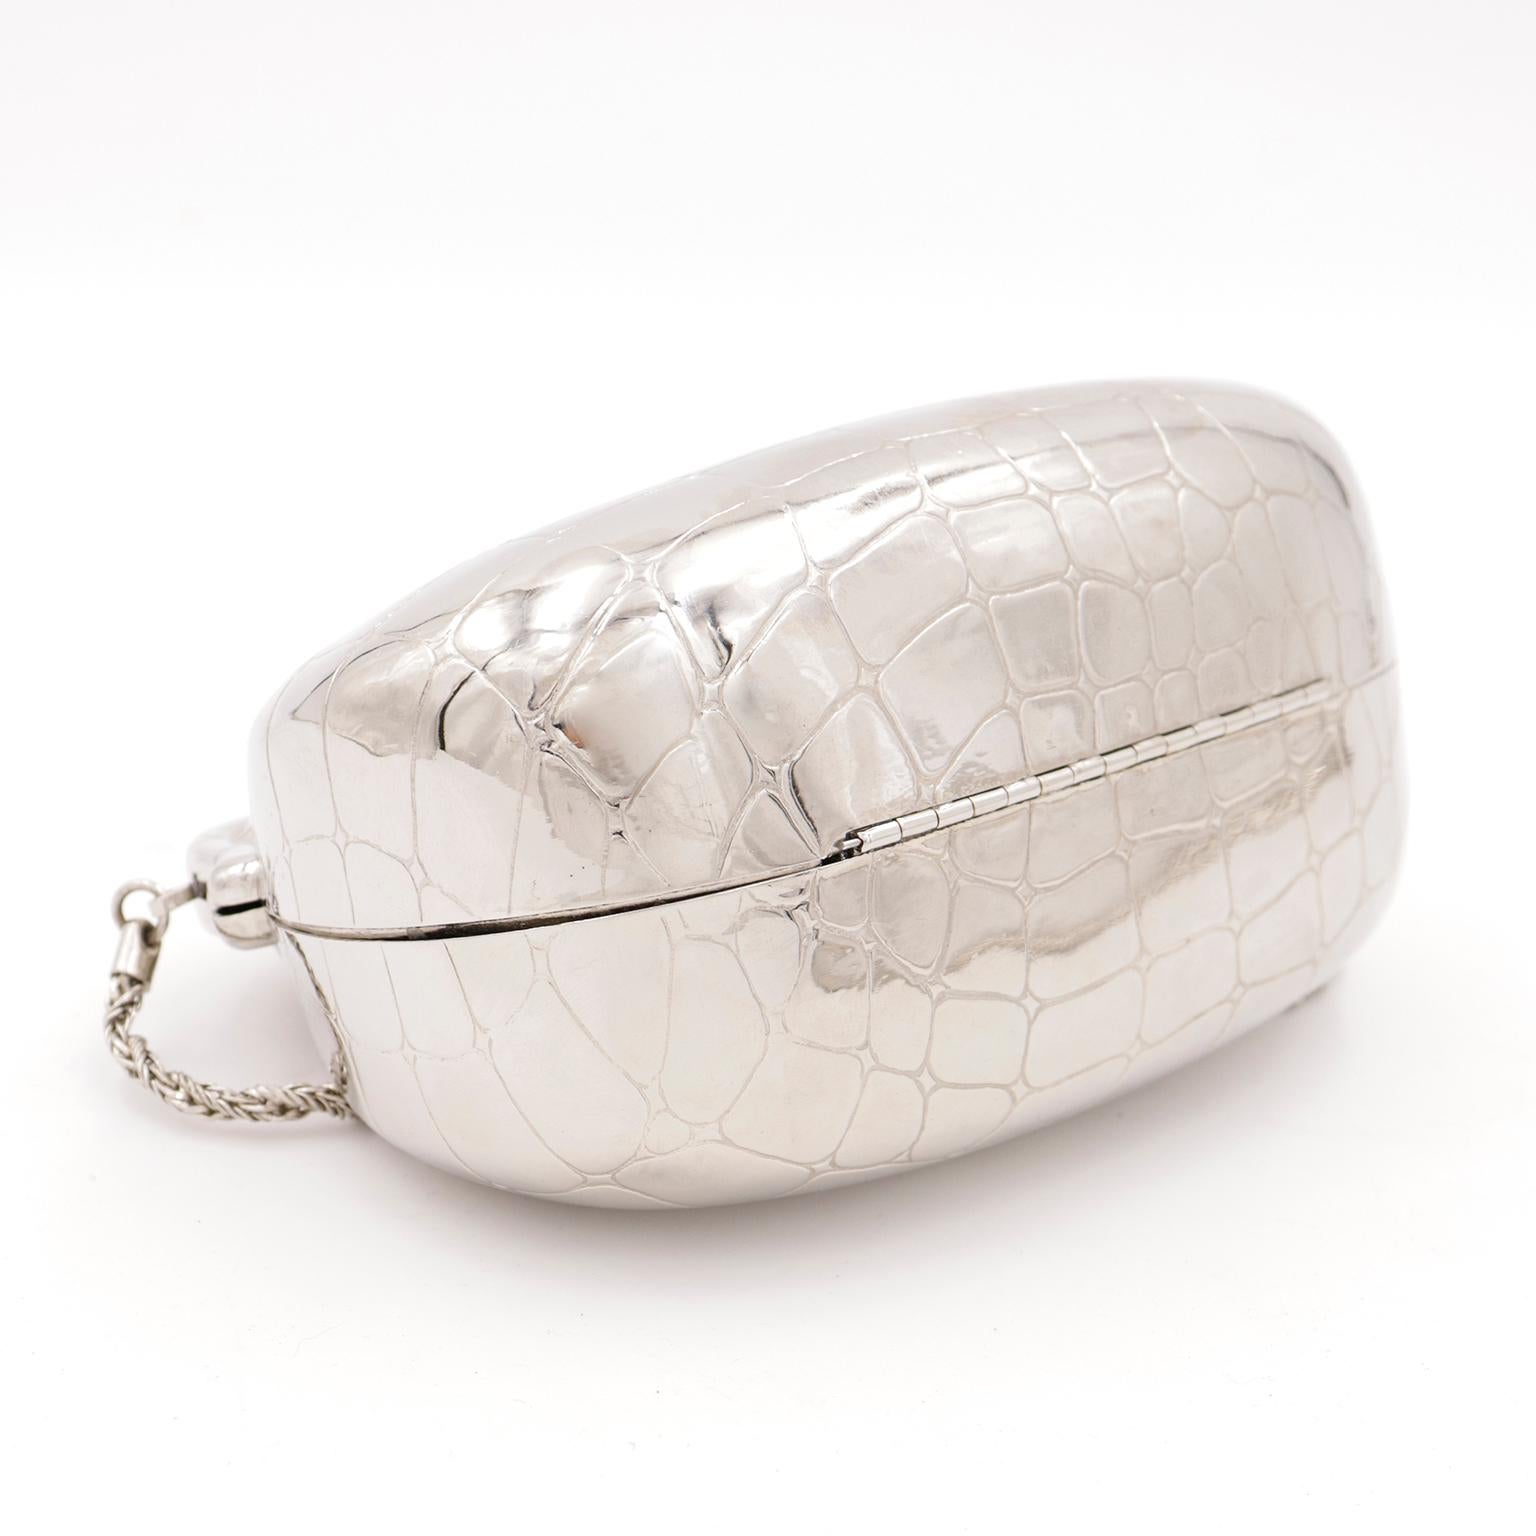 Women's Vintage Silver Hard Case Alligator Embossed Kiss Lock Evening Bag W Chain Strap For Sale